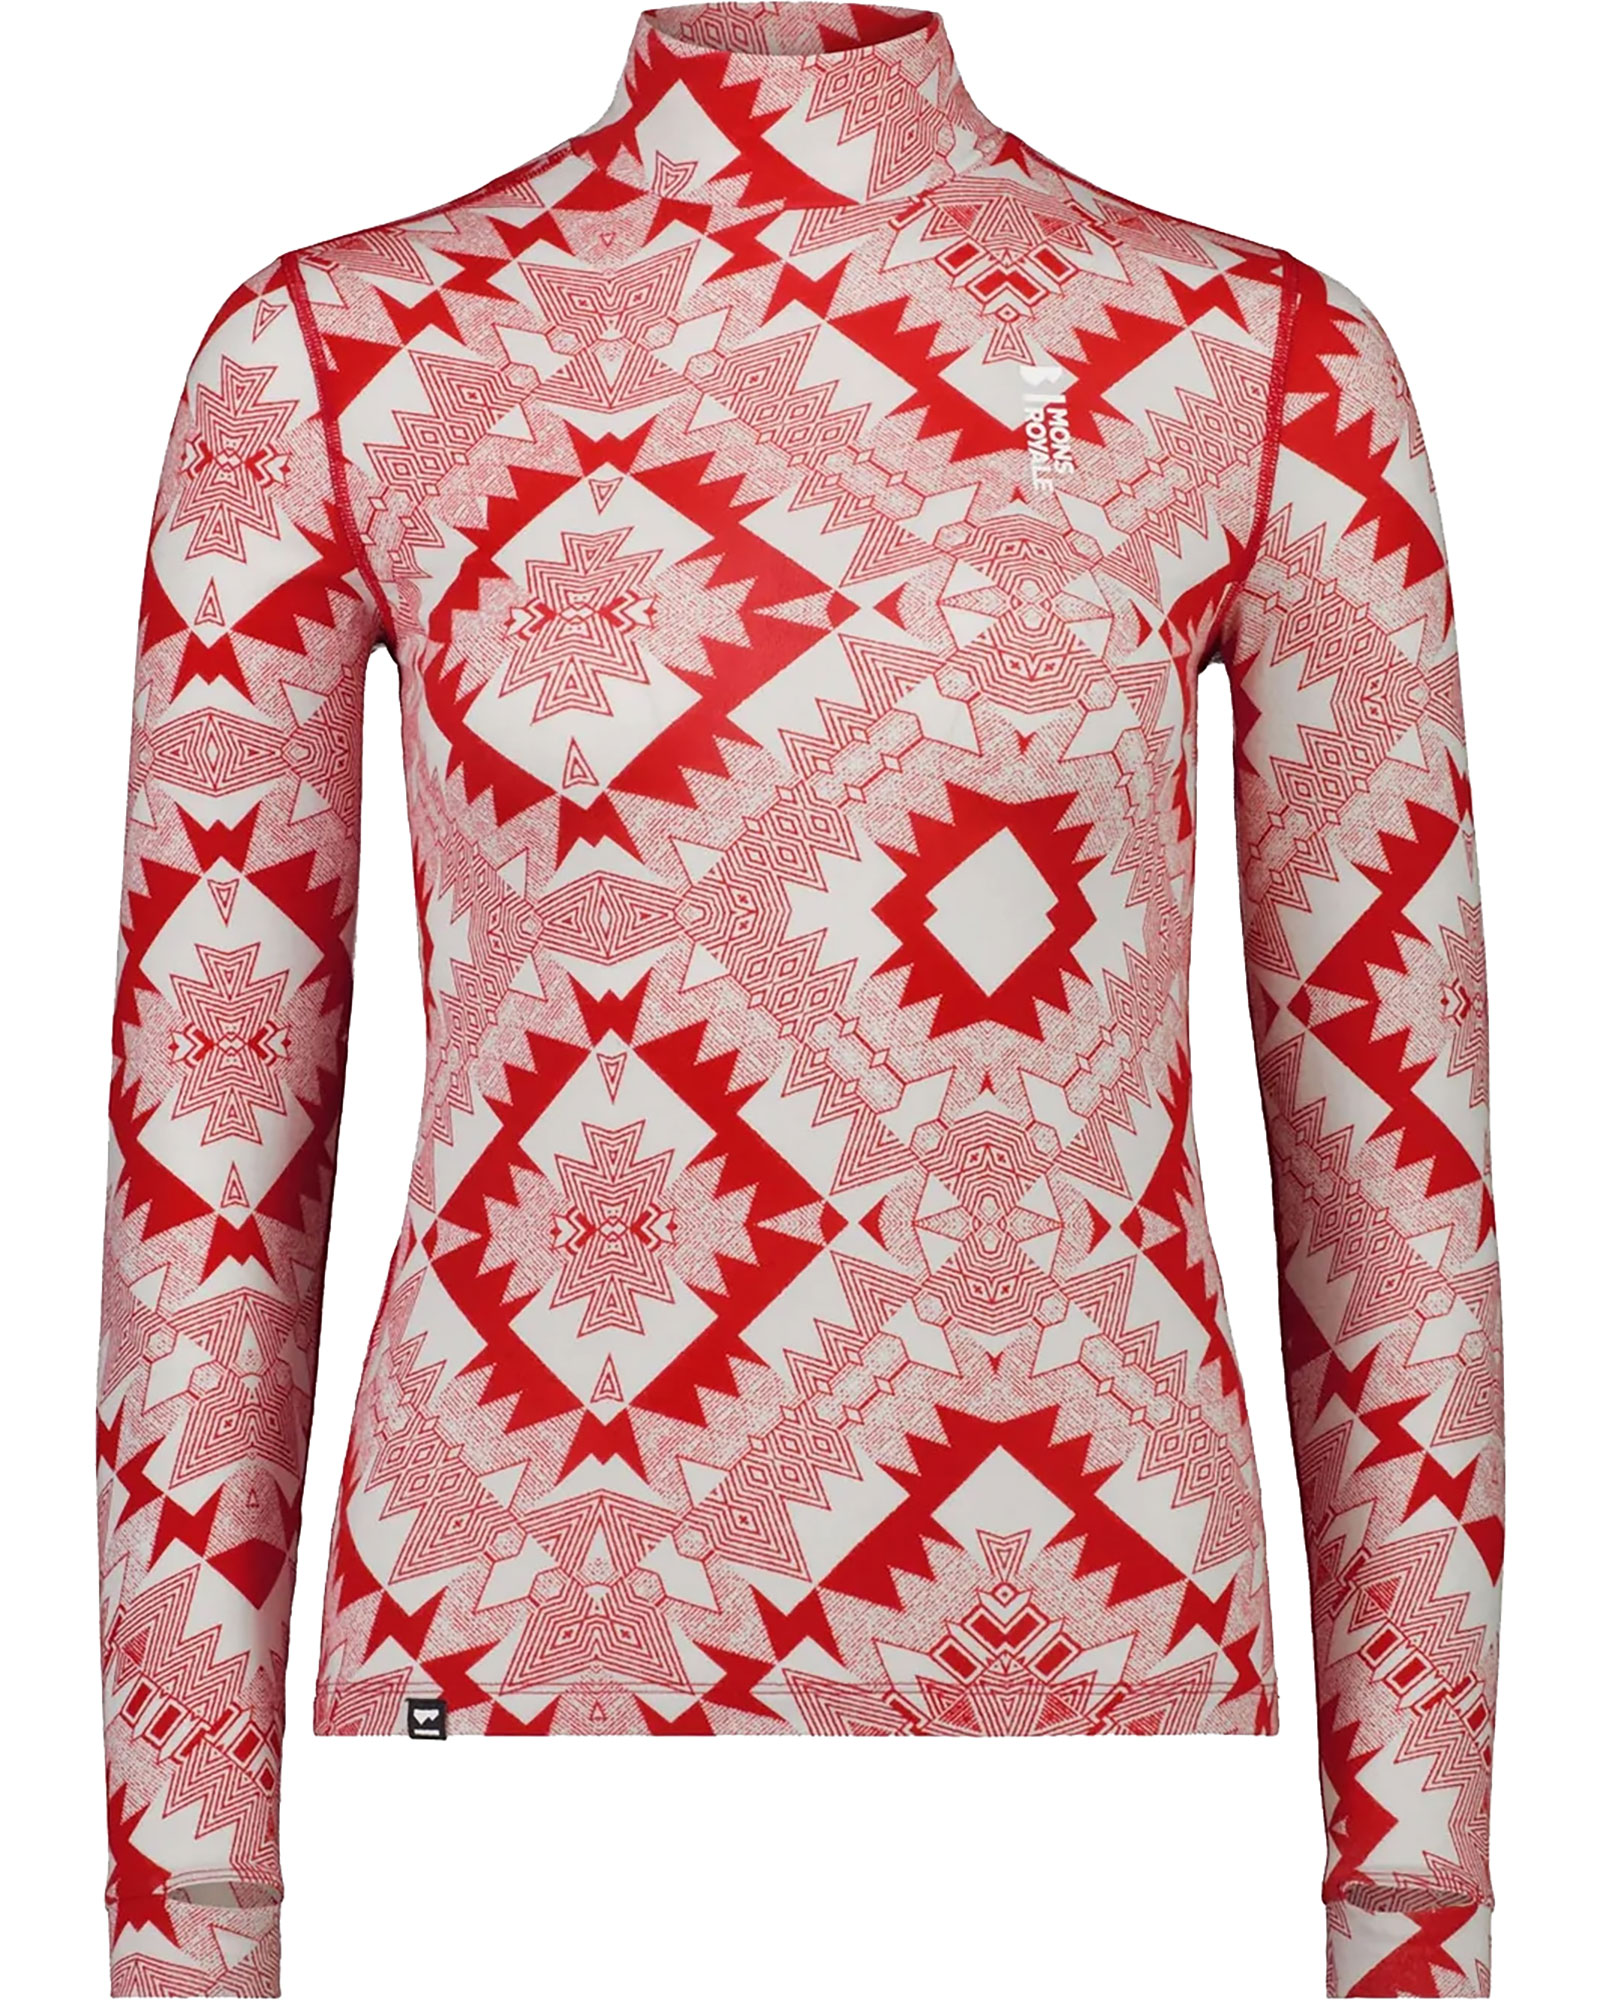 Mons Royale Cascade Merino Flex 200 Mock Neck Women’s Long Sleeve T Shirt - Retro Red Nordtek XS